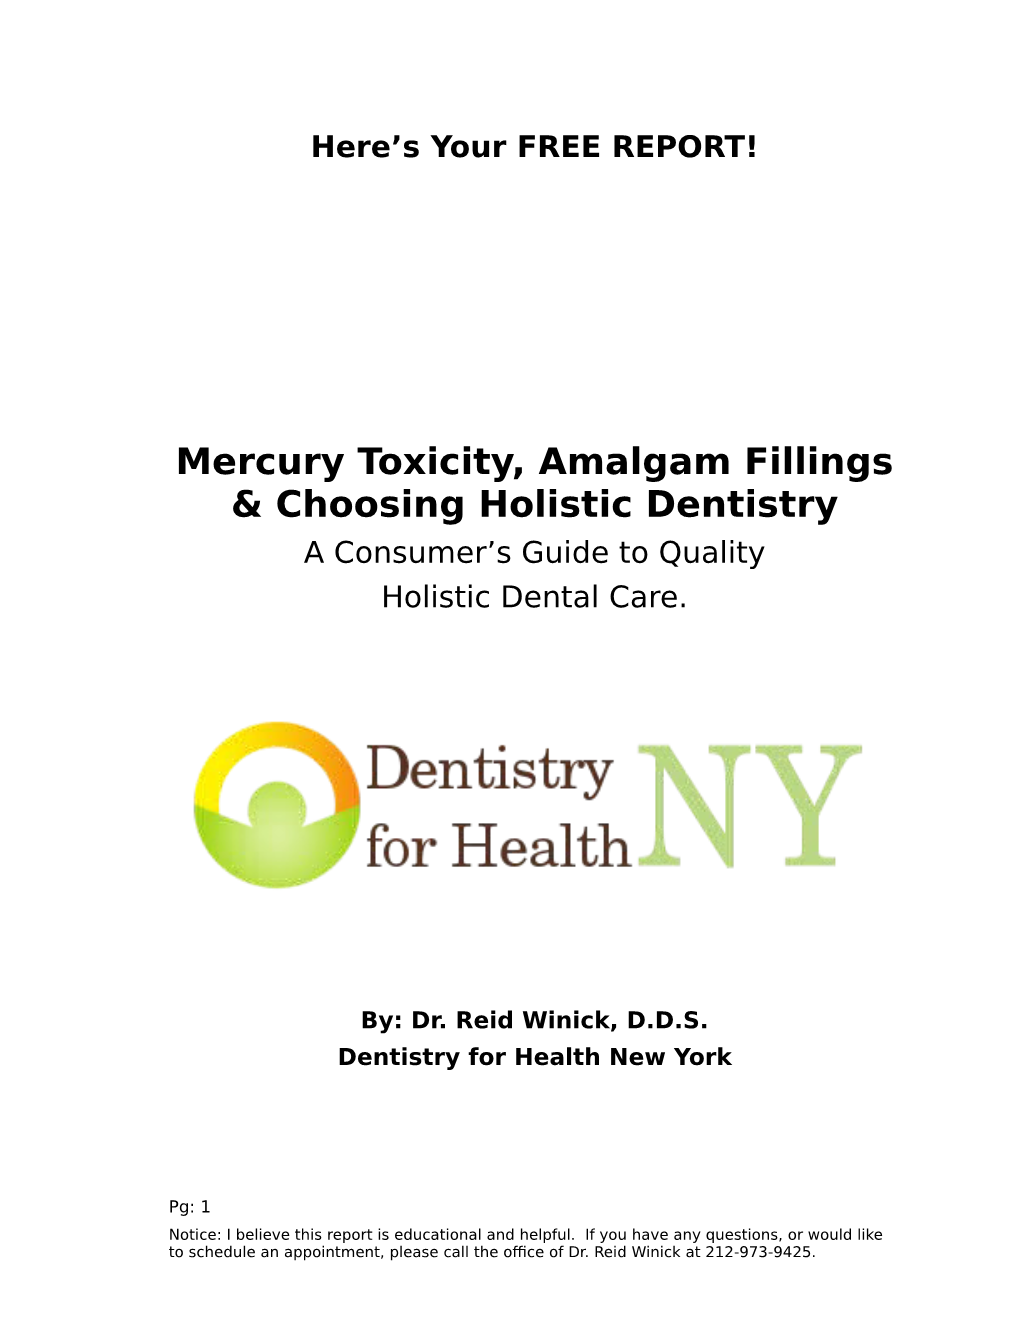 Mercury Toxicity, Amalgam Fillings & Choosing Holistic Dentistry a Consumer’S Guide to Quality Holistic Dental Care